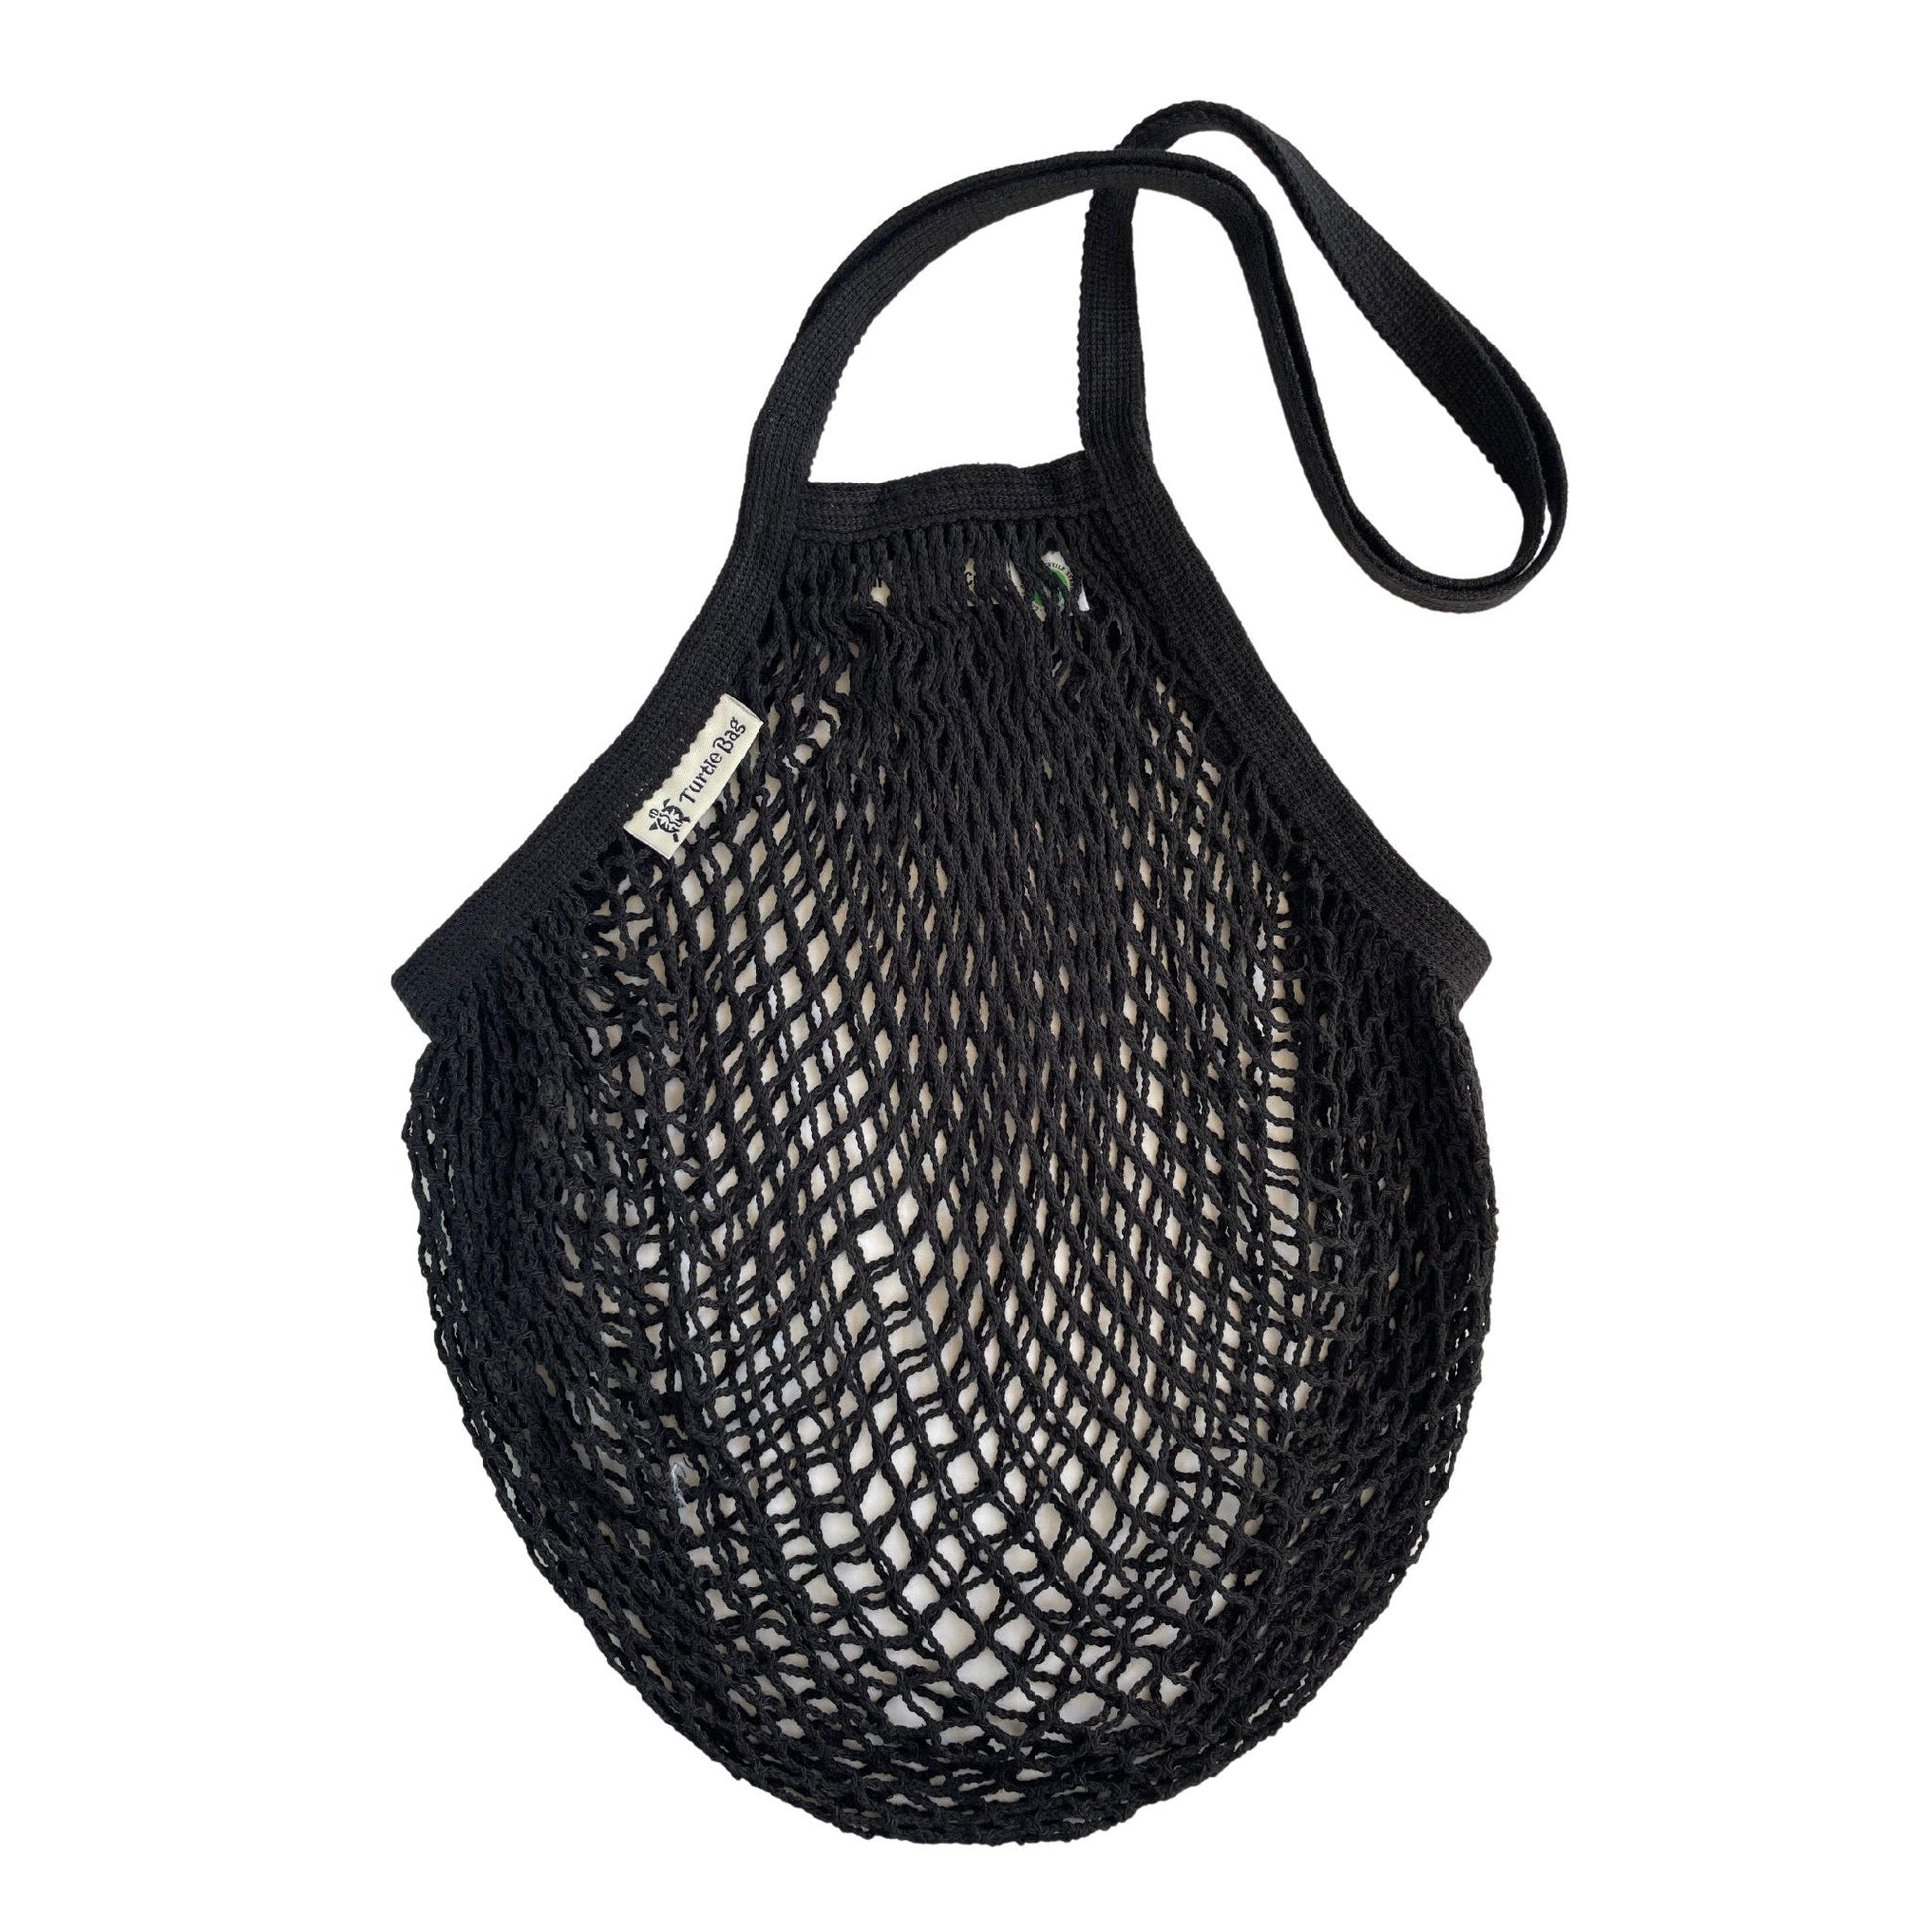 Turtle Bags Organic Long Handled String Bag Black - Bumble Living